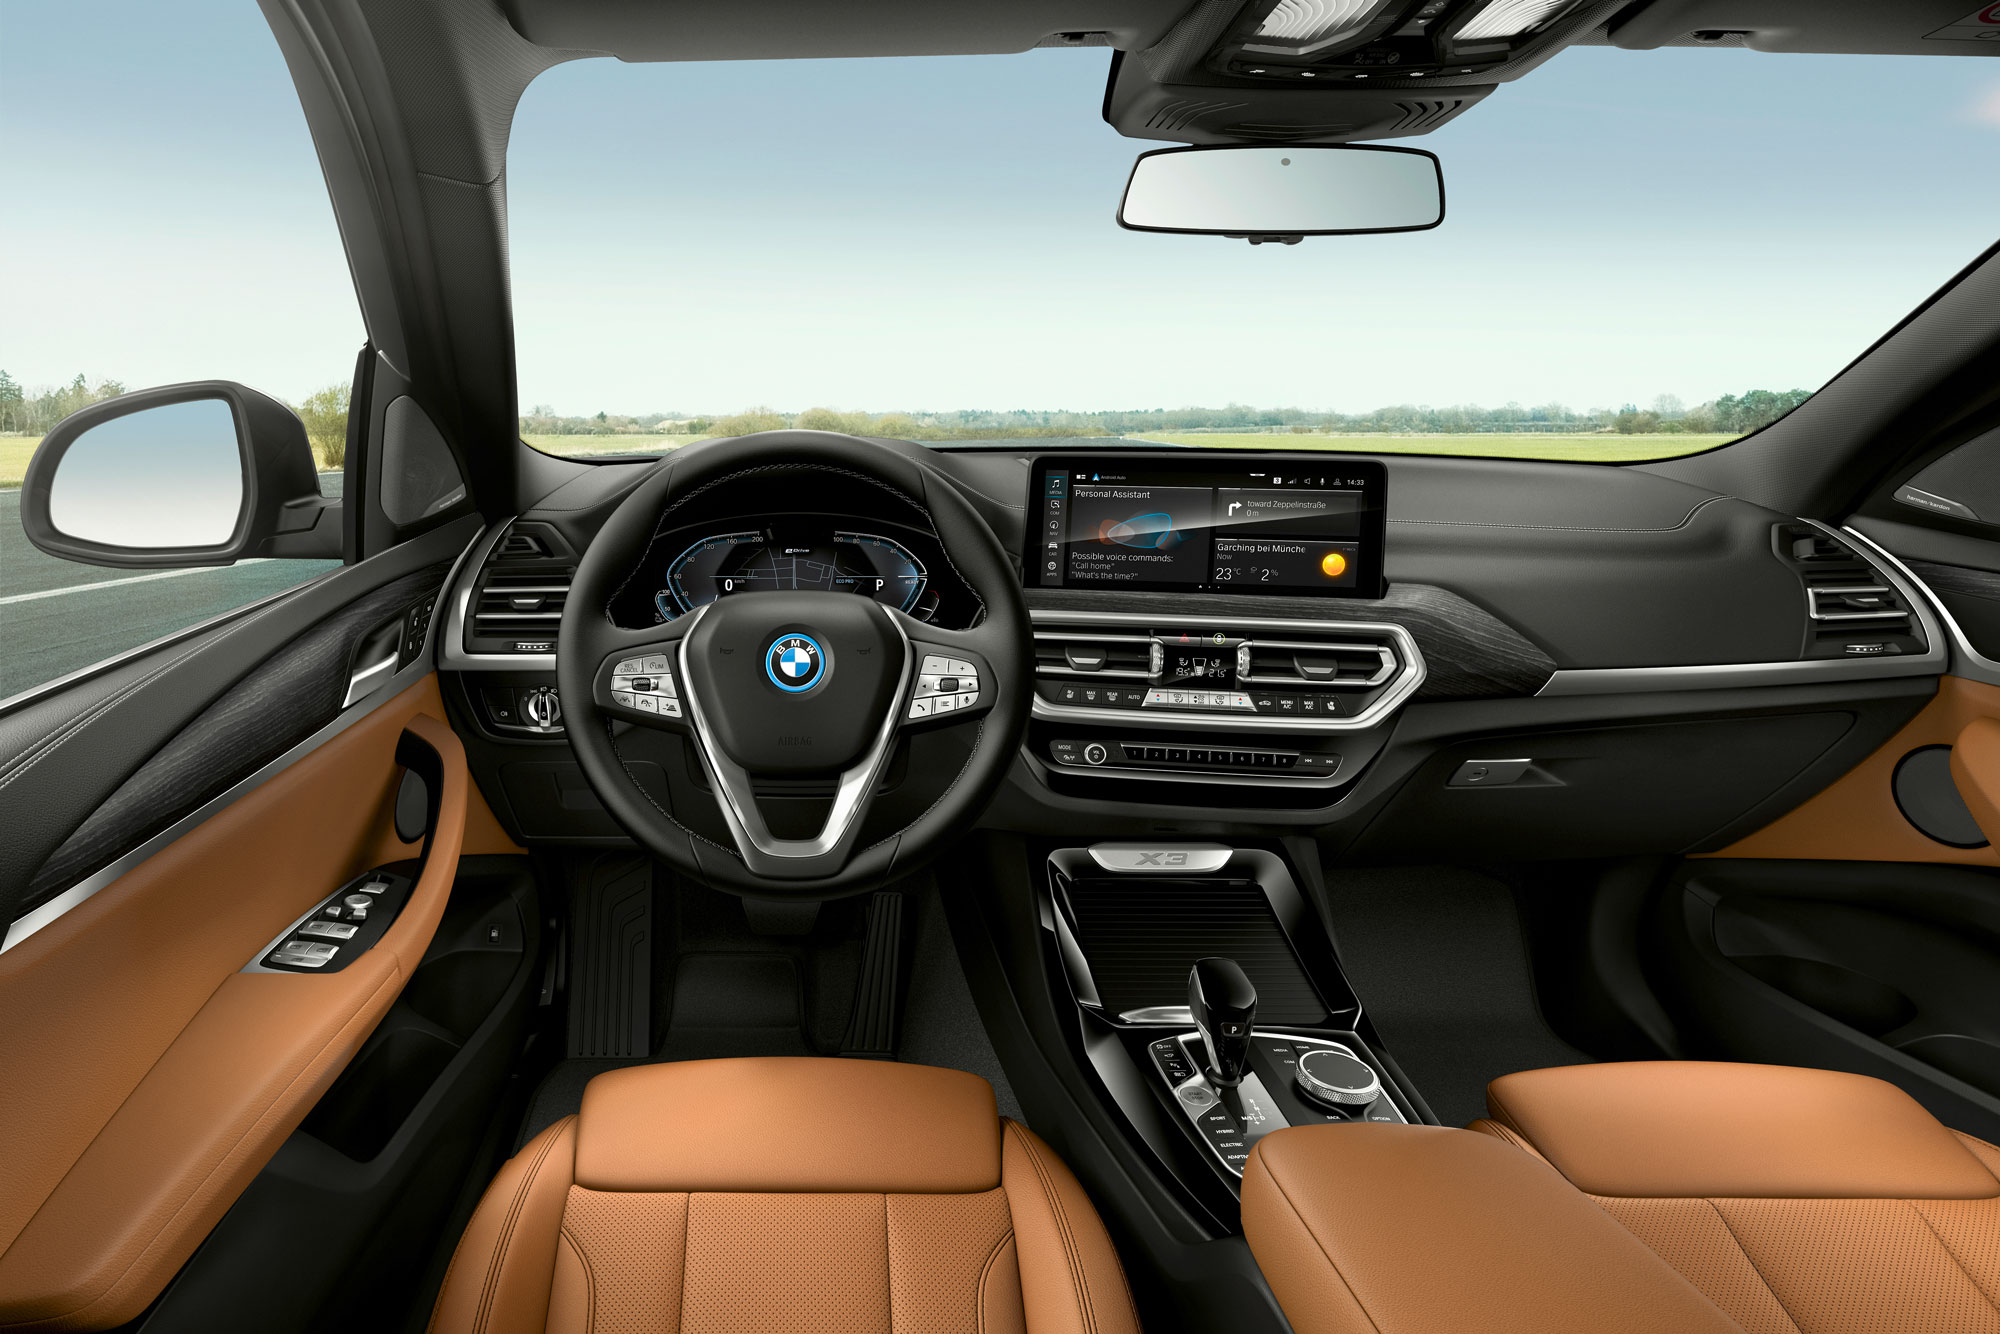 2022 BMW X3 interior dashboard